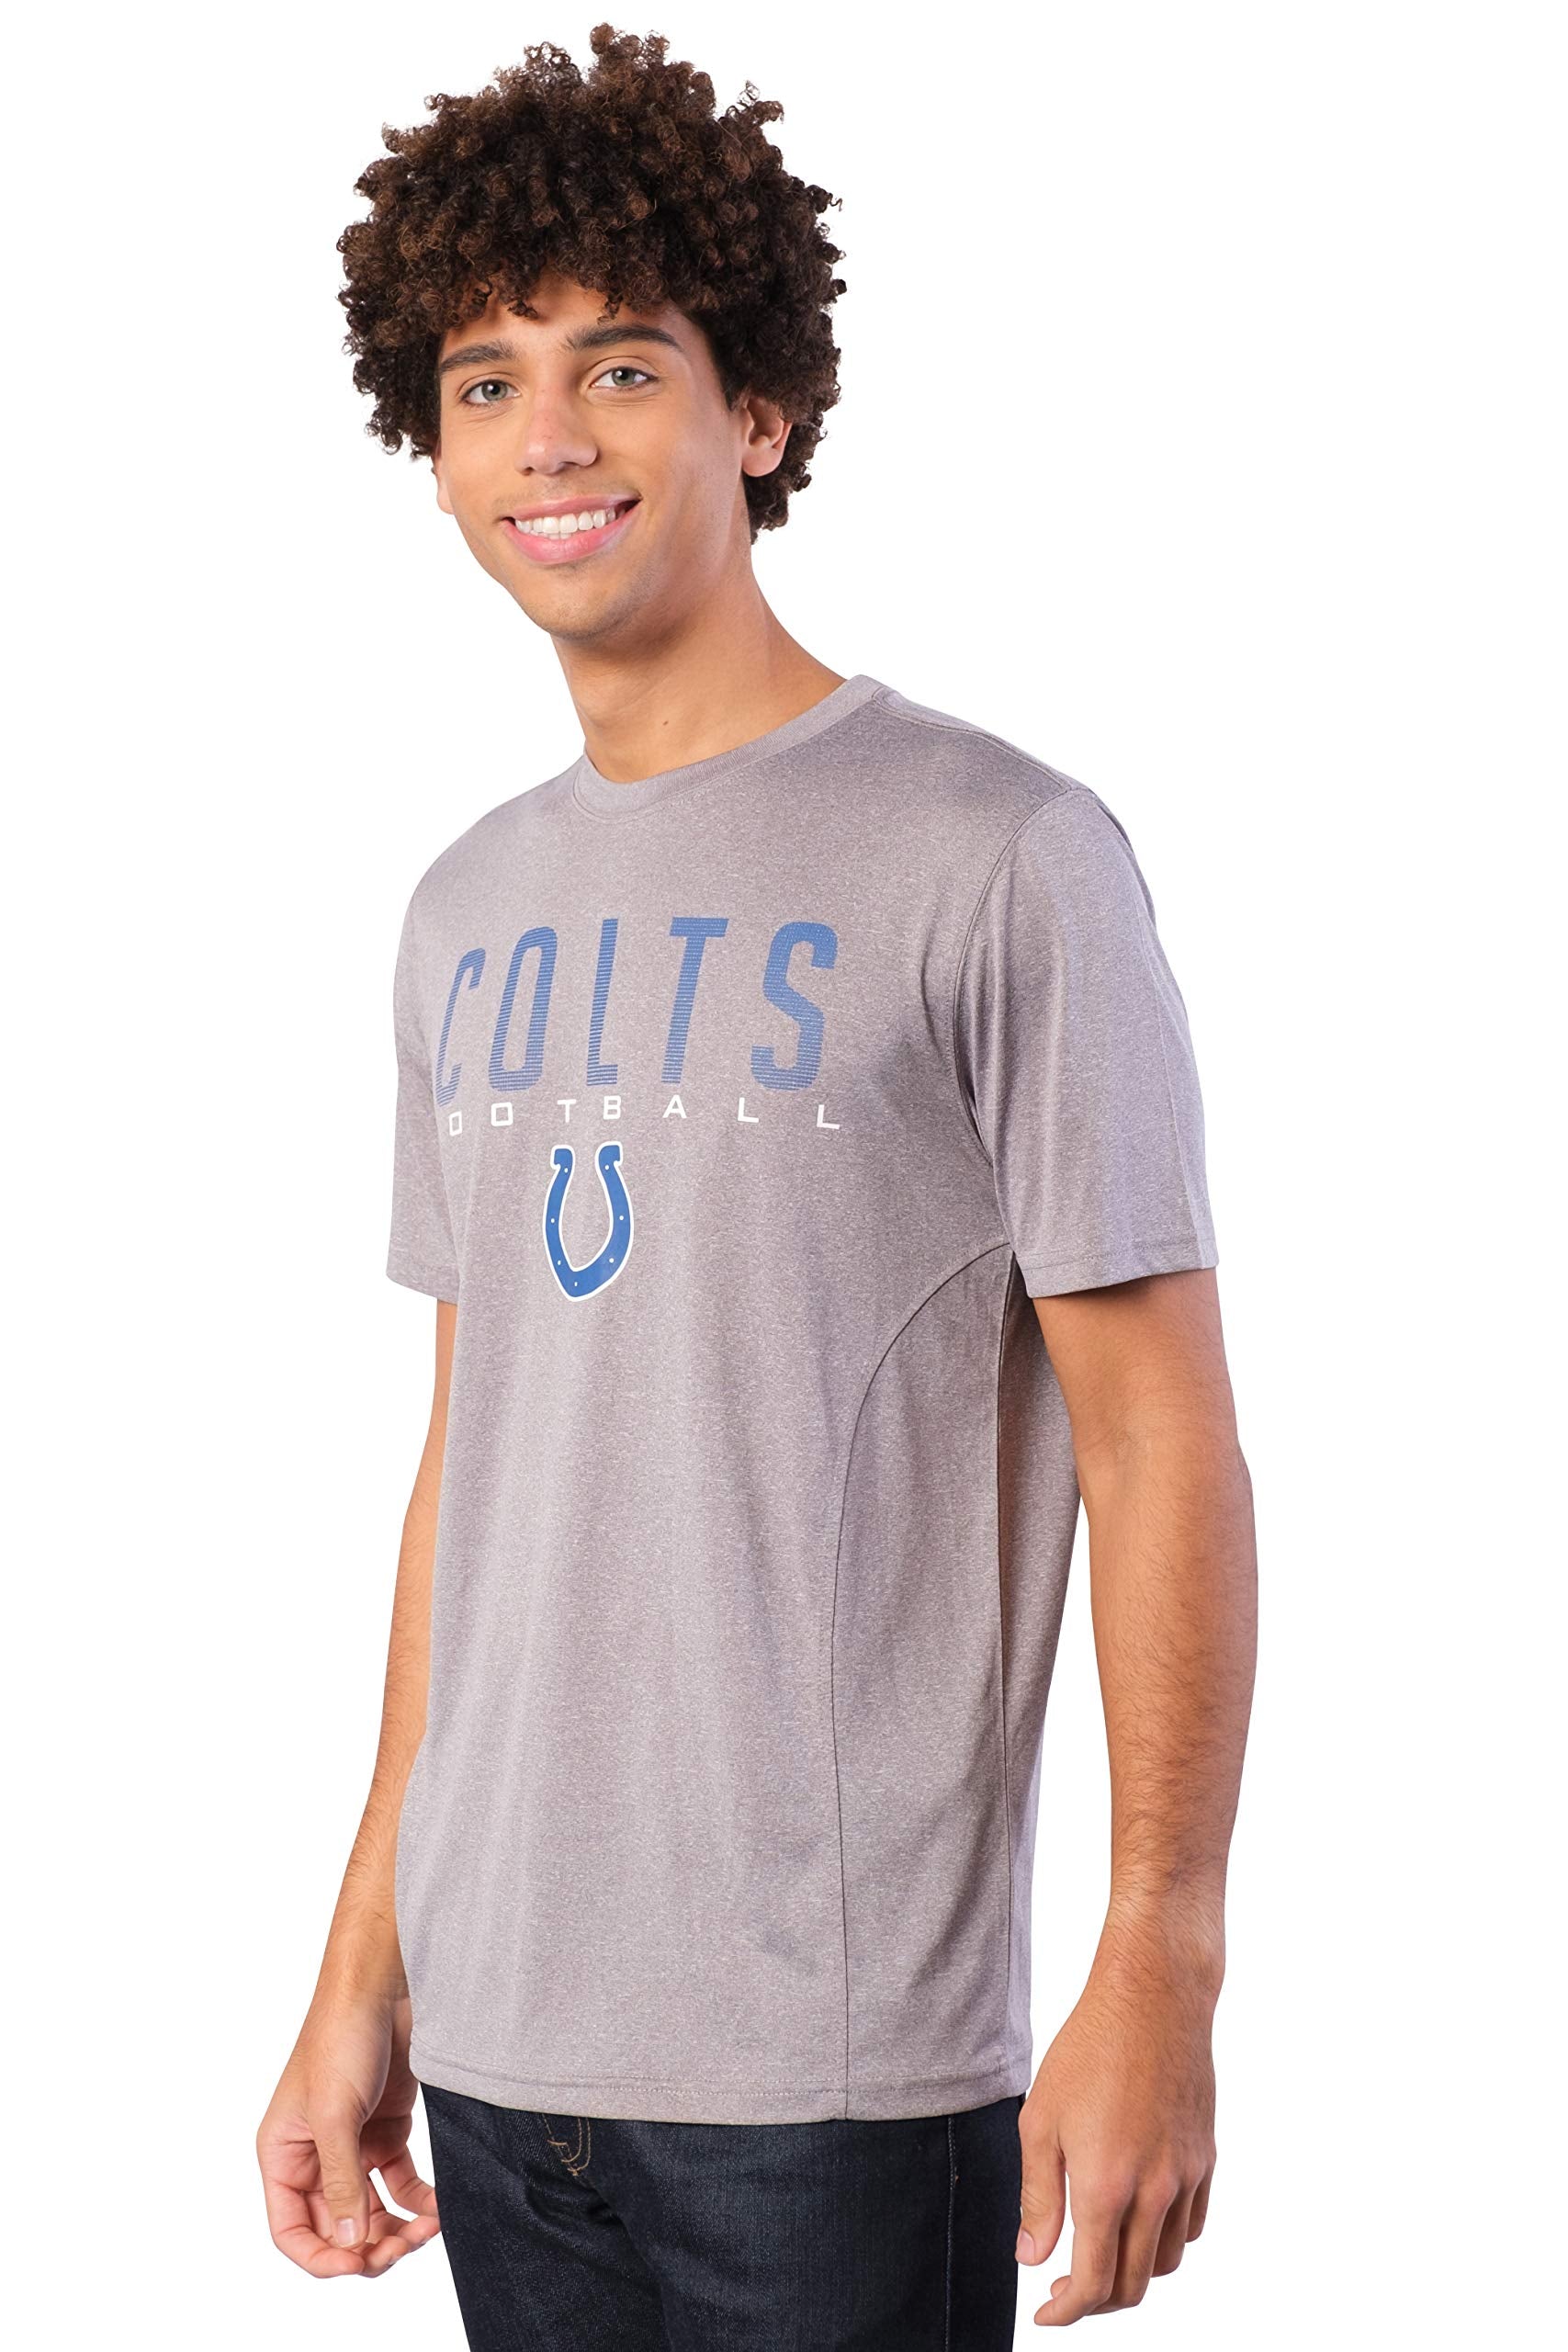 Ultra Game NFL Indianapolis Colts Mens Super Soft Ultimate Game Day T-Shirt|Indianapolis Colts